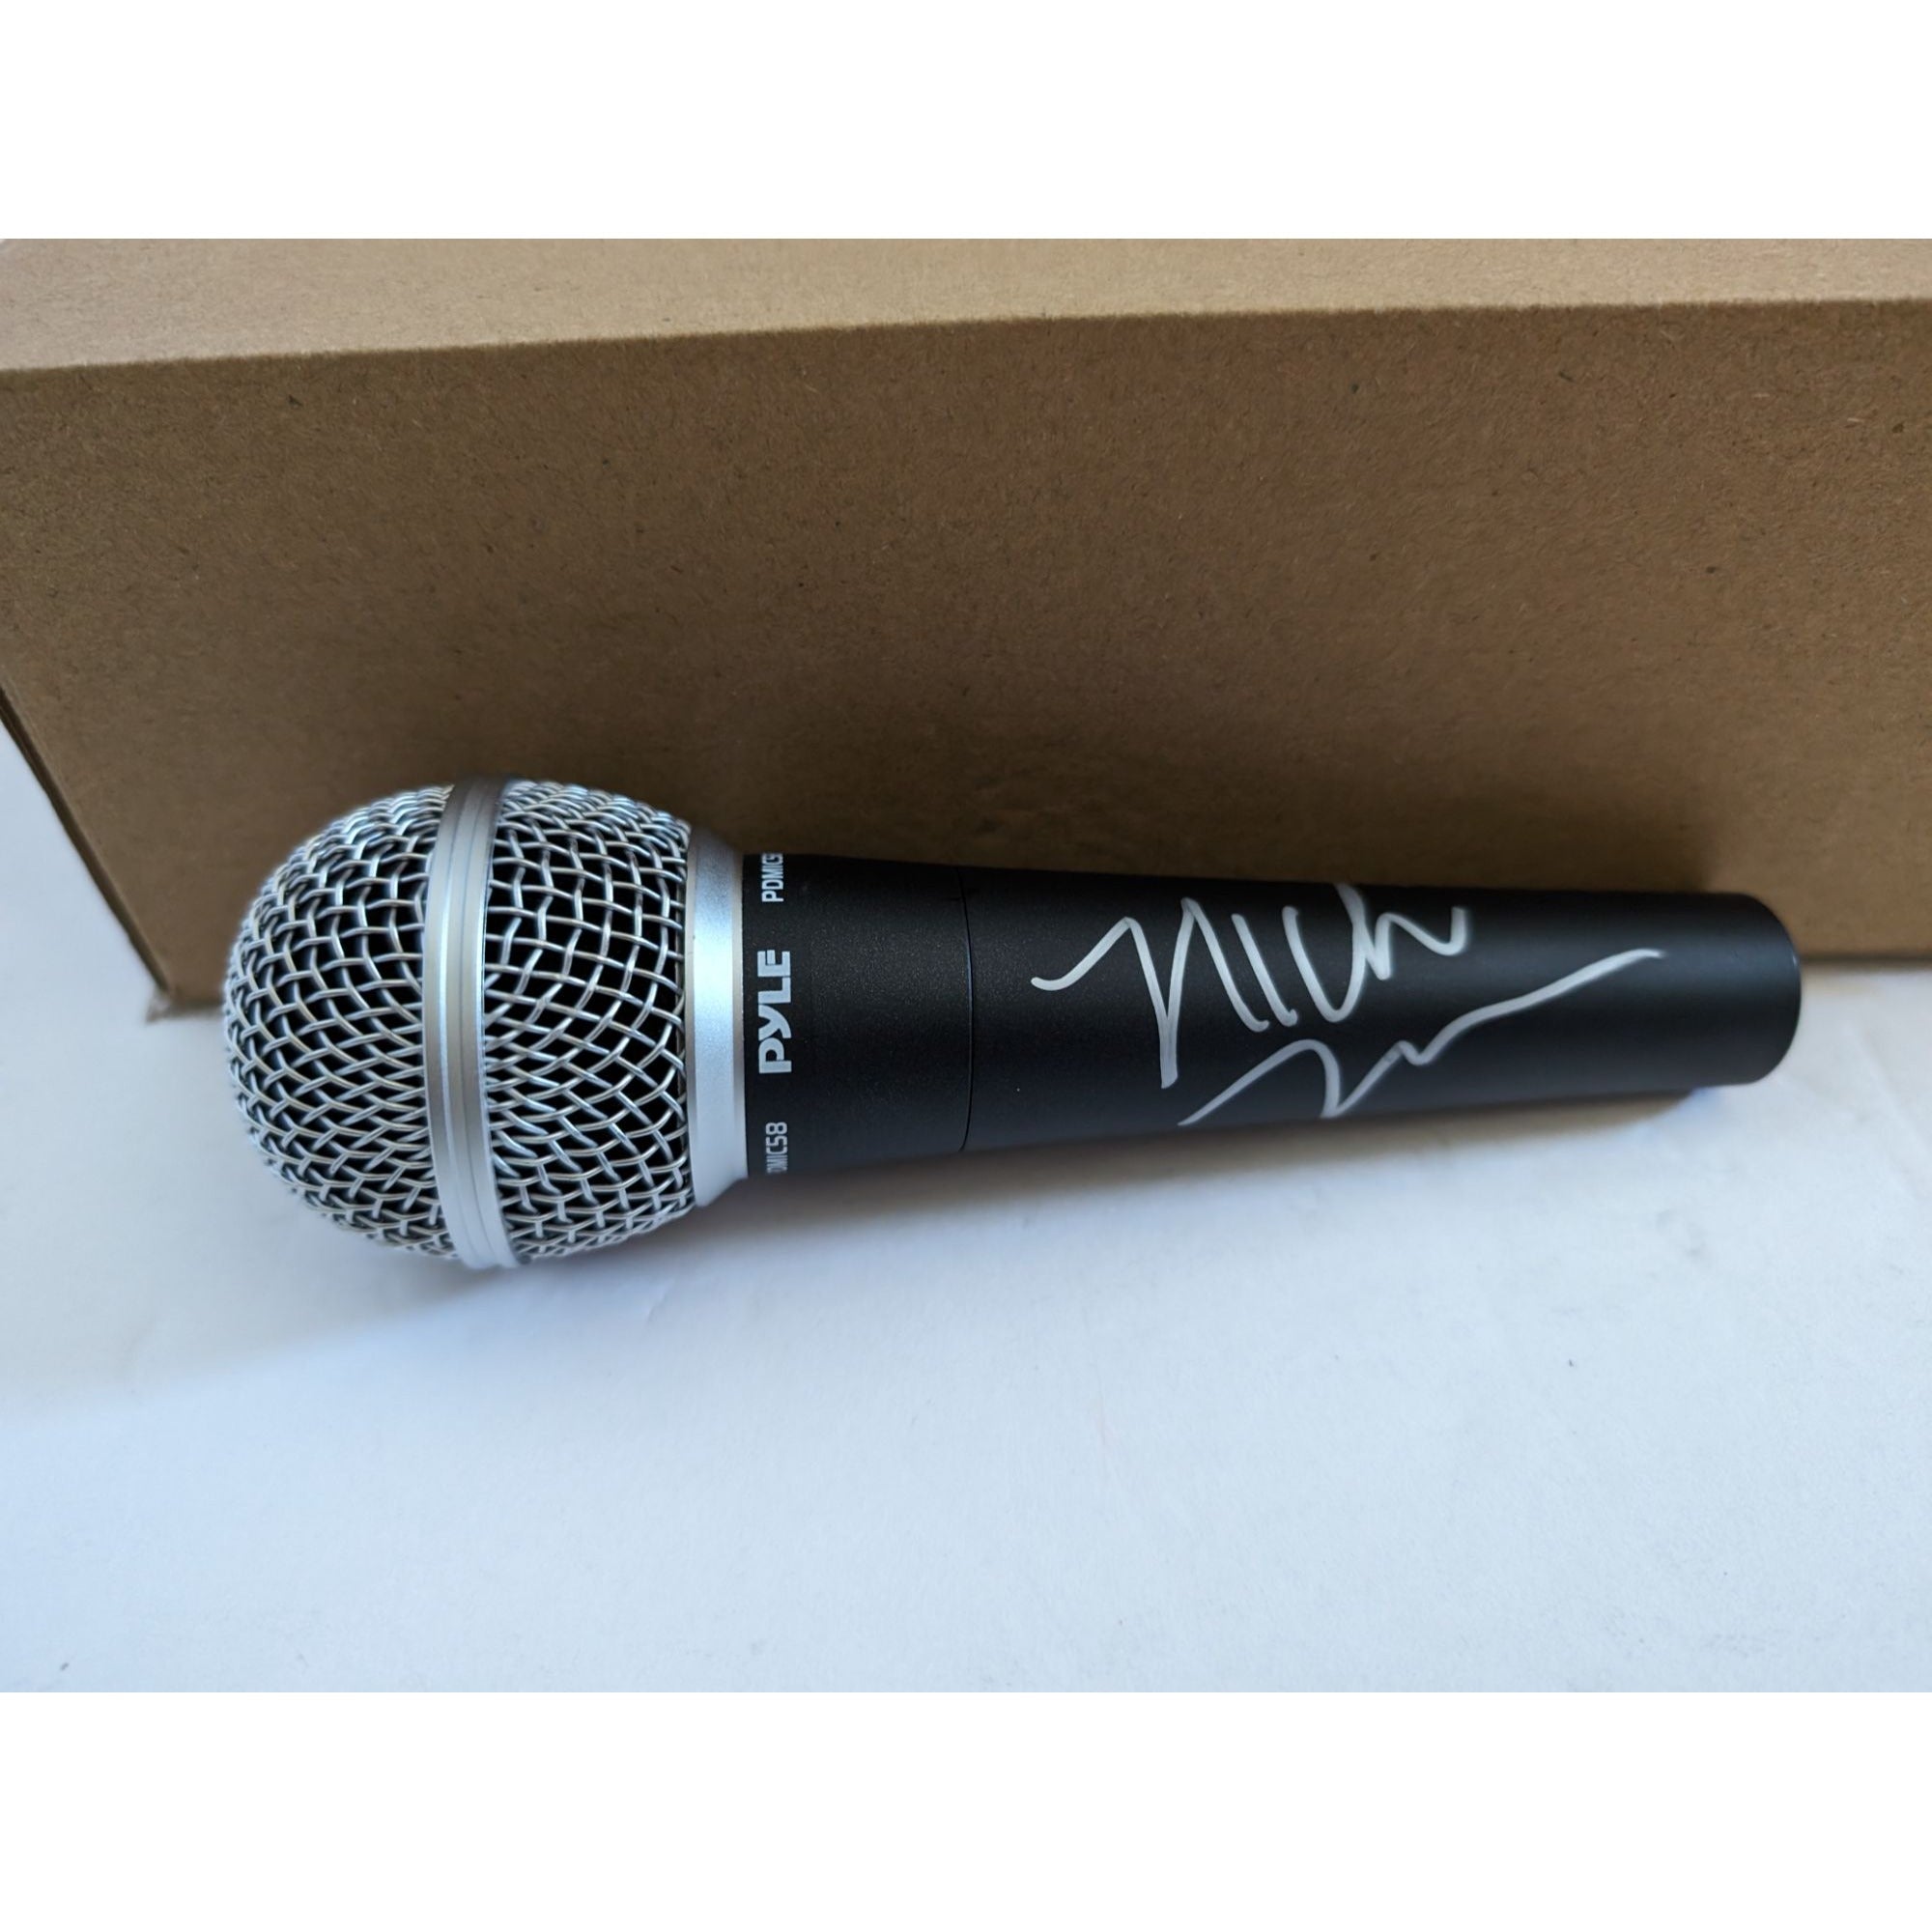 Onika Tanya Maraj-Petty 'Nicki Minaj' microphone signed with proof